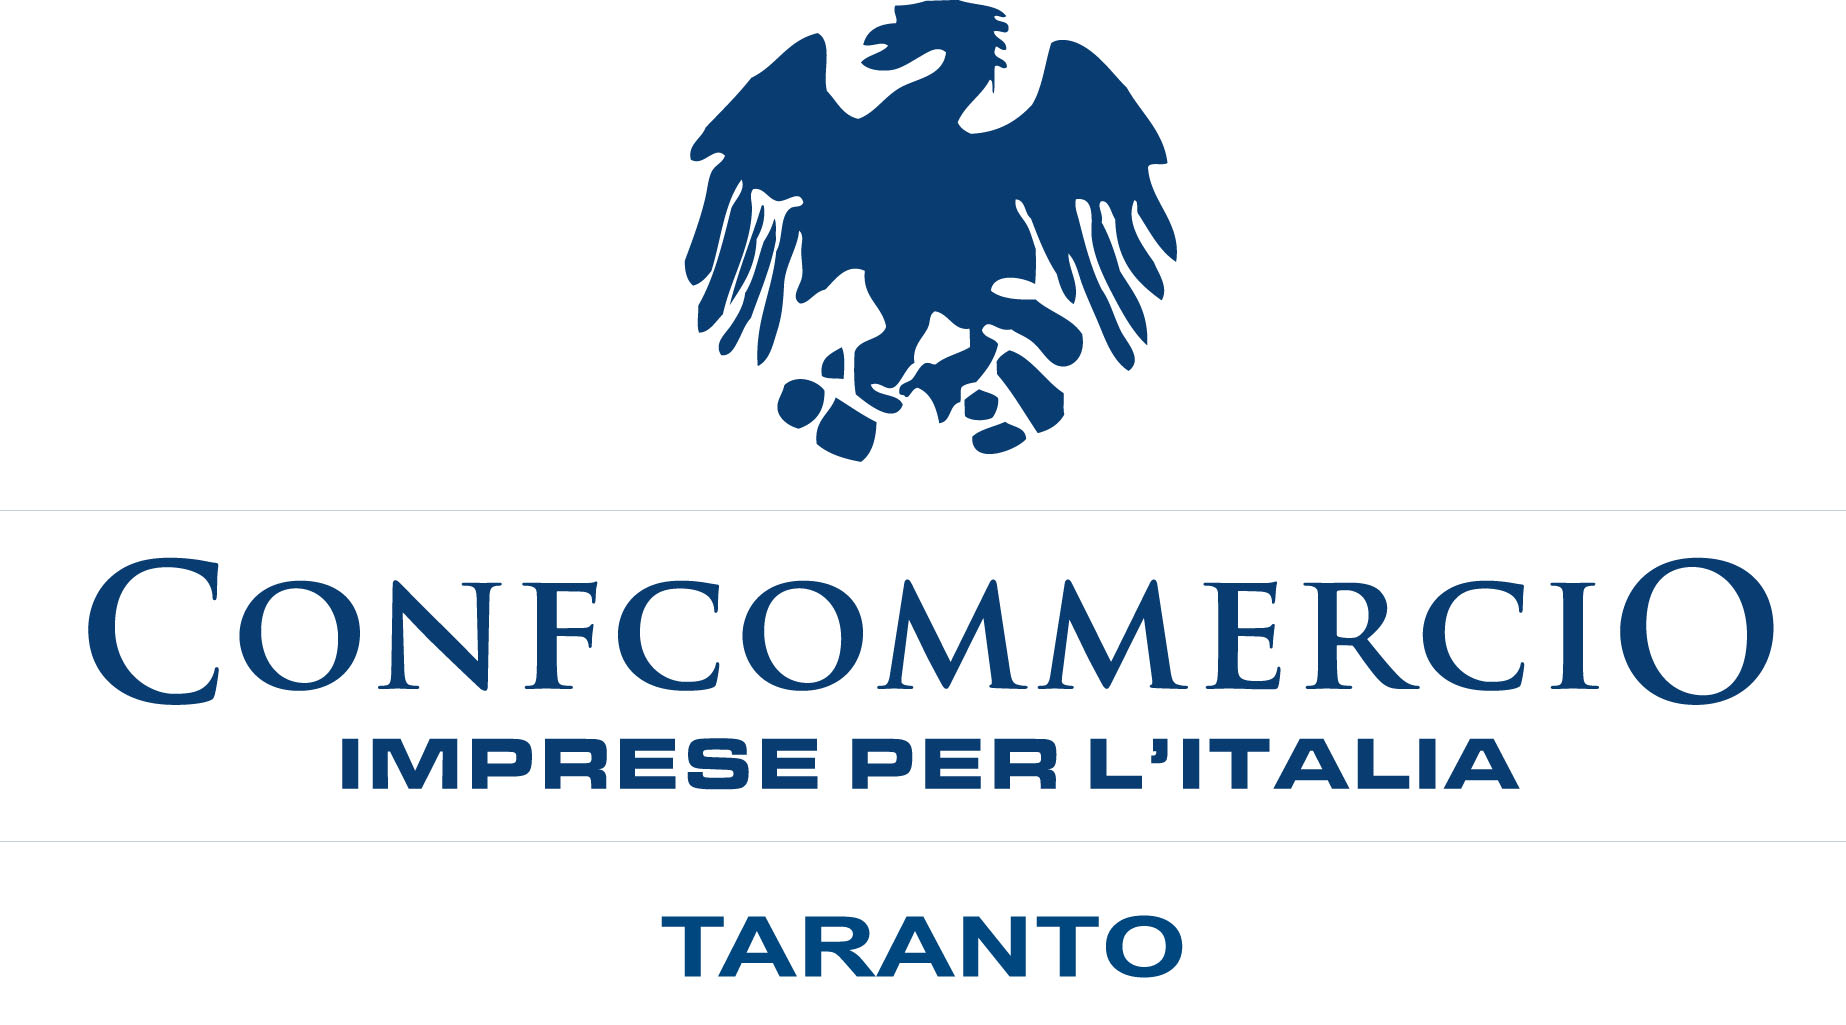 CONFCOMMERCIO IMPRESE PER L'ITALIA - TARANTO